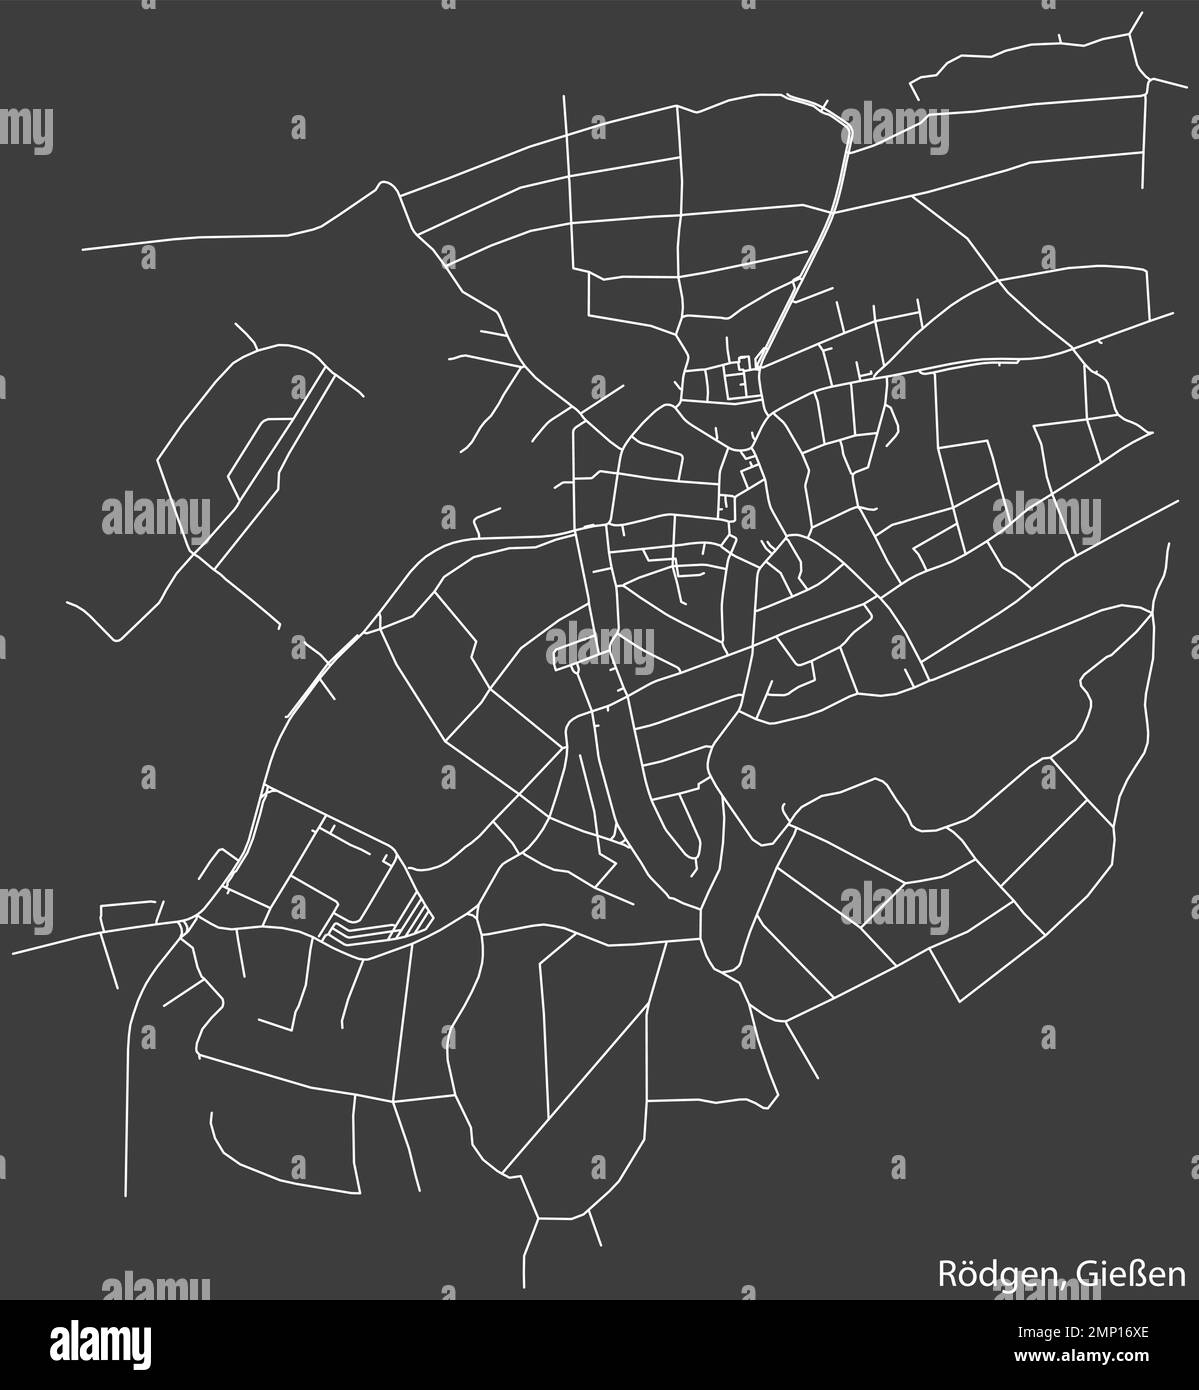 Street roads map of the RÖDGEN DISTRICT, GIESSEN Stock Vector